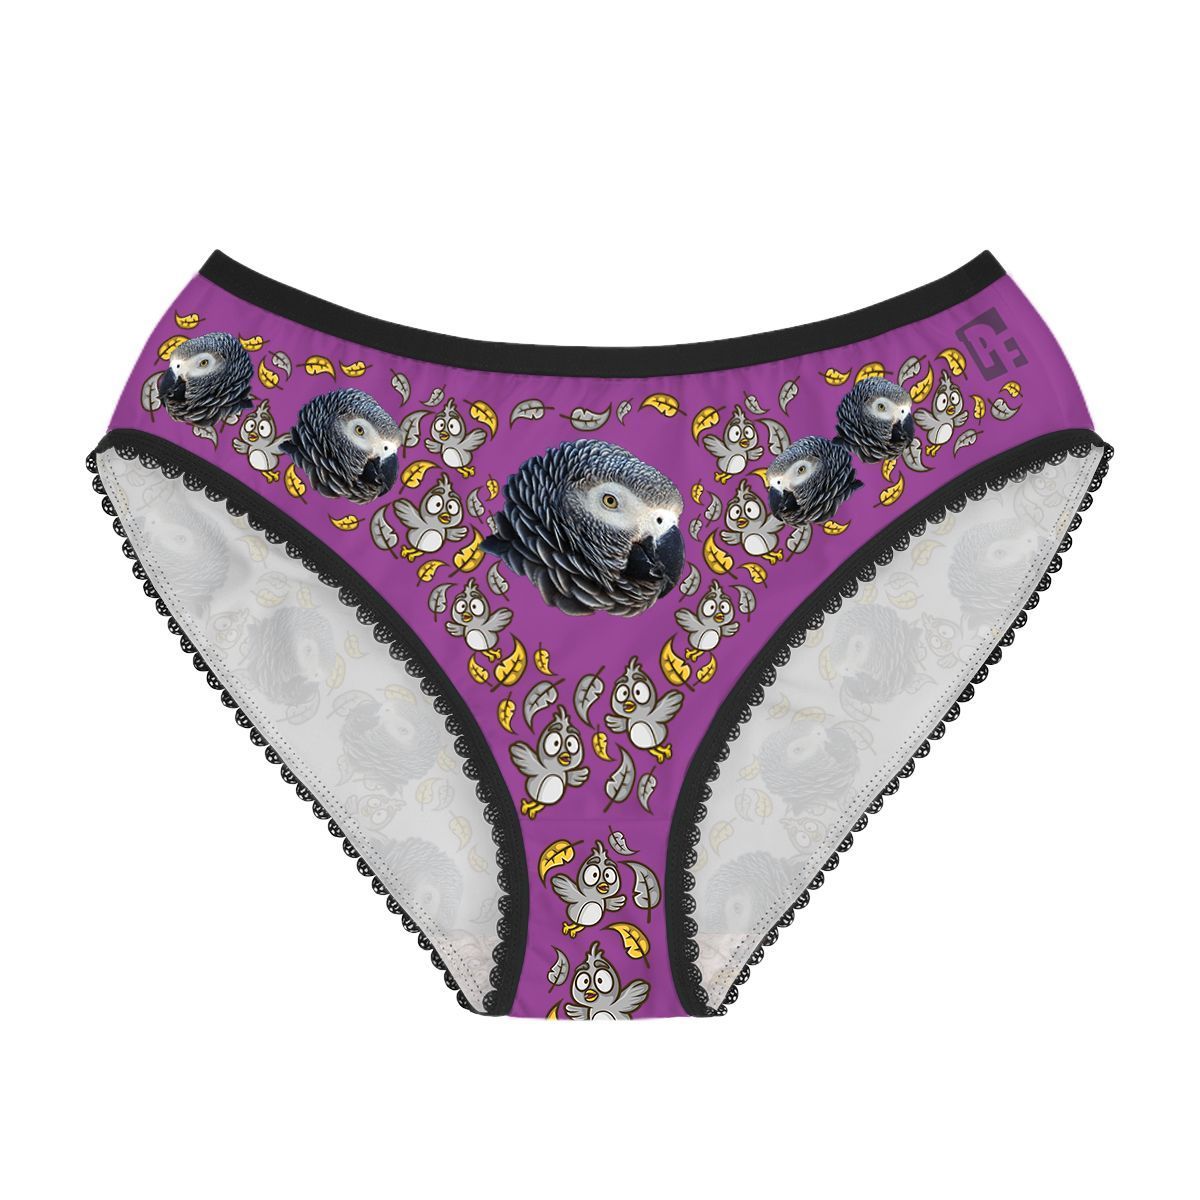 Purple Bird women's underwear briefs personalized with photo printed on them